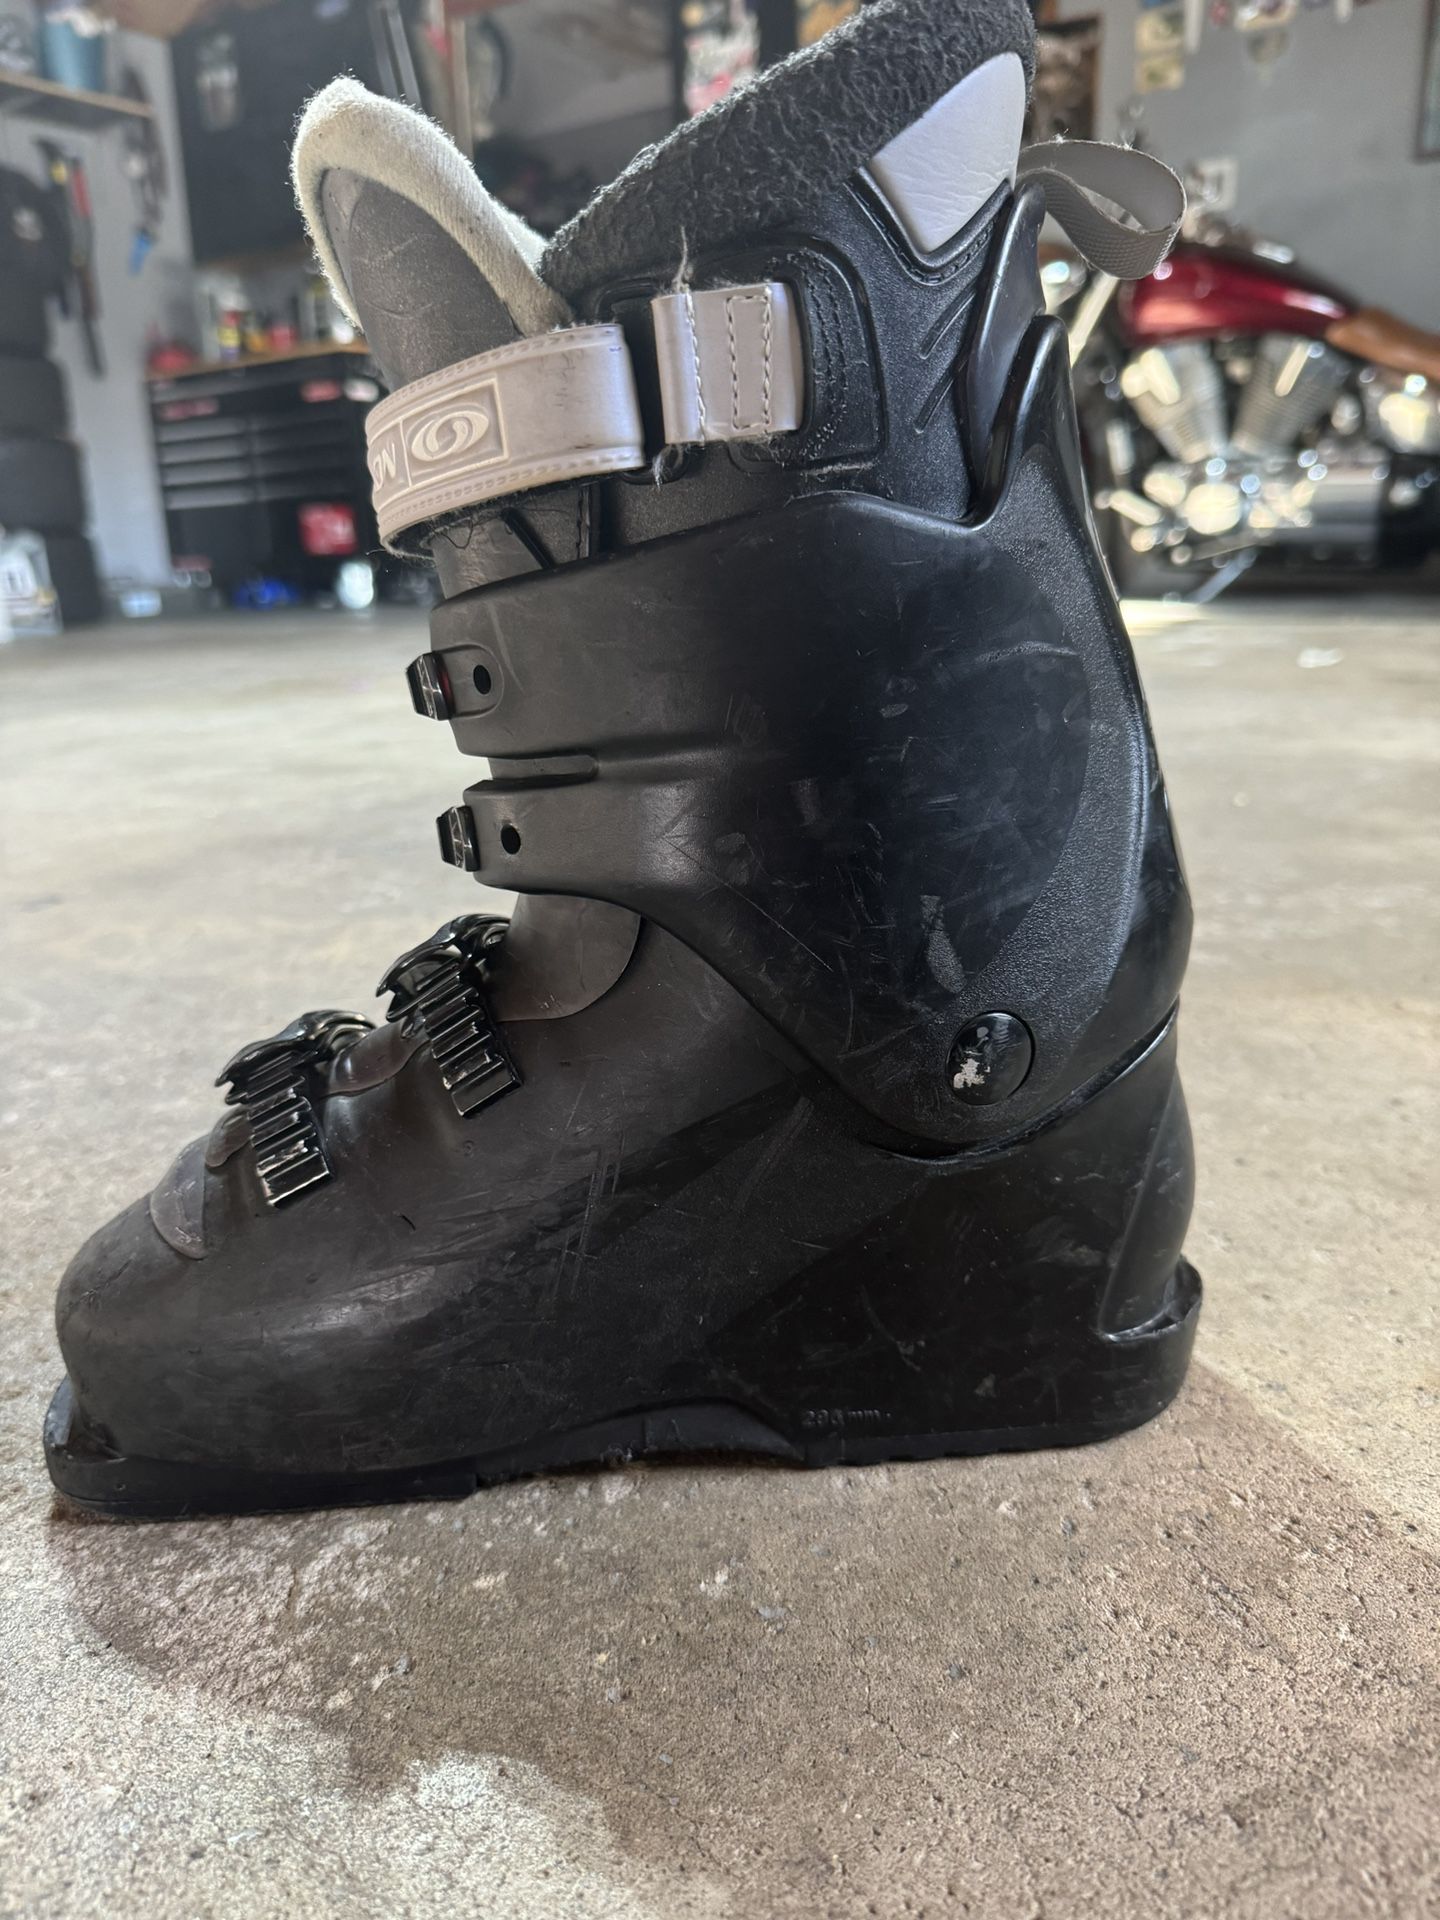 Salomon Women’s ski boots